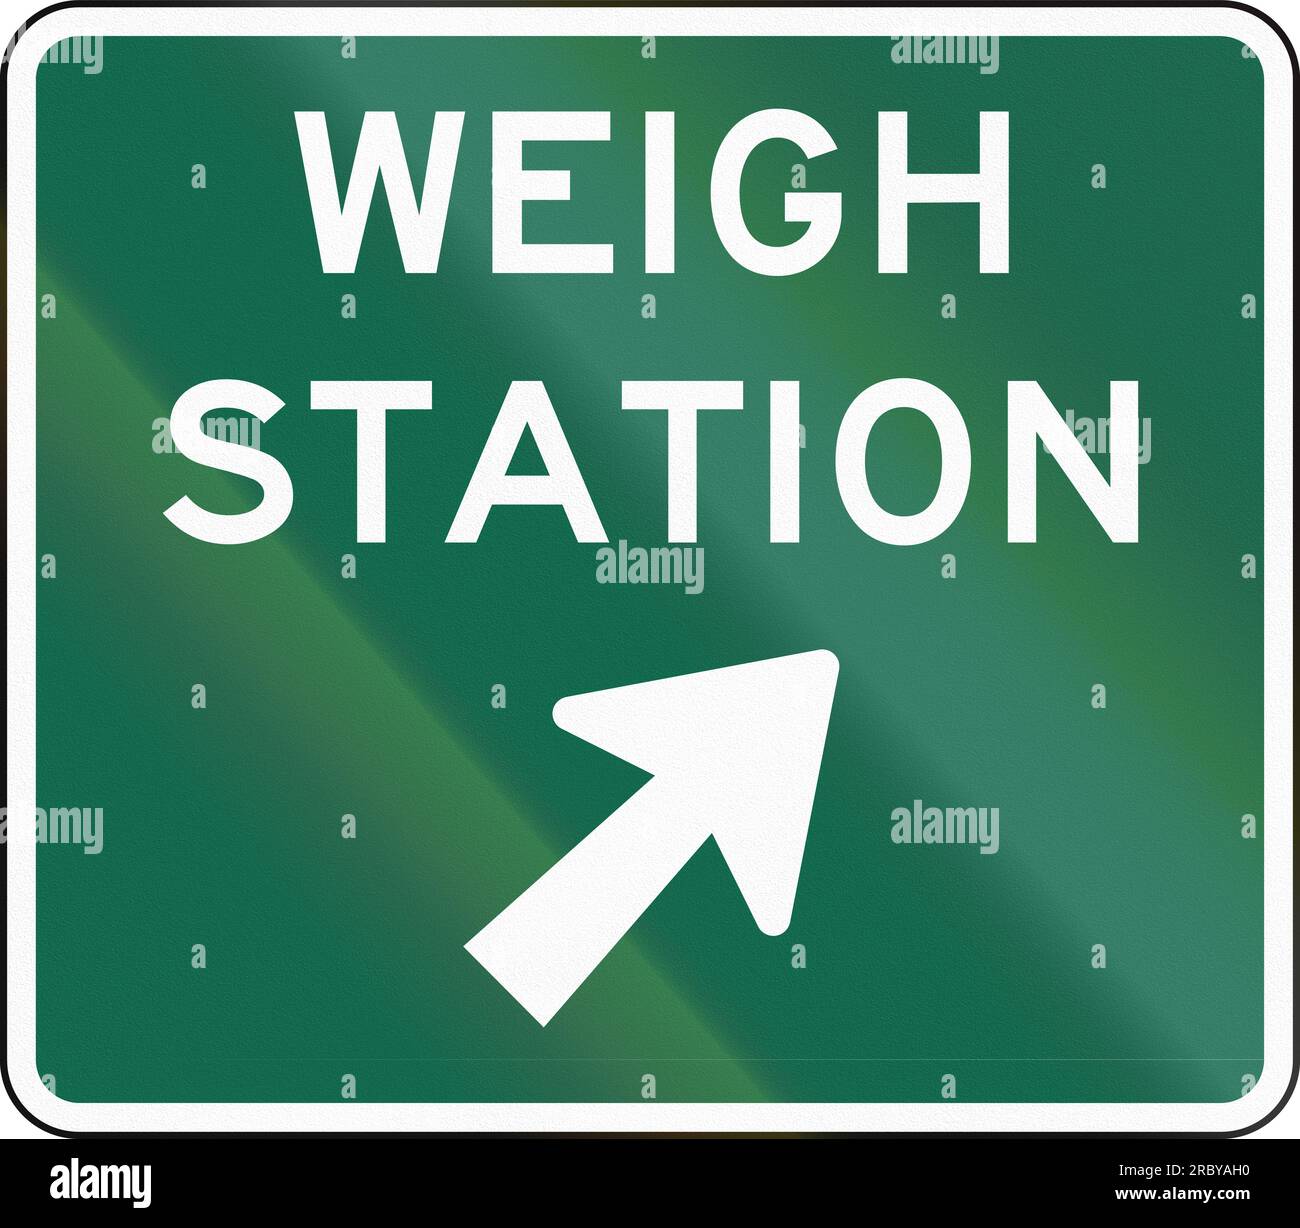 https://c8.alamy.com/comp/2RBYAH0/united-states-mutcd-weigh-station-sign-2RBYAH0.jpg